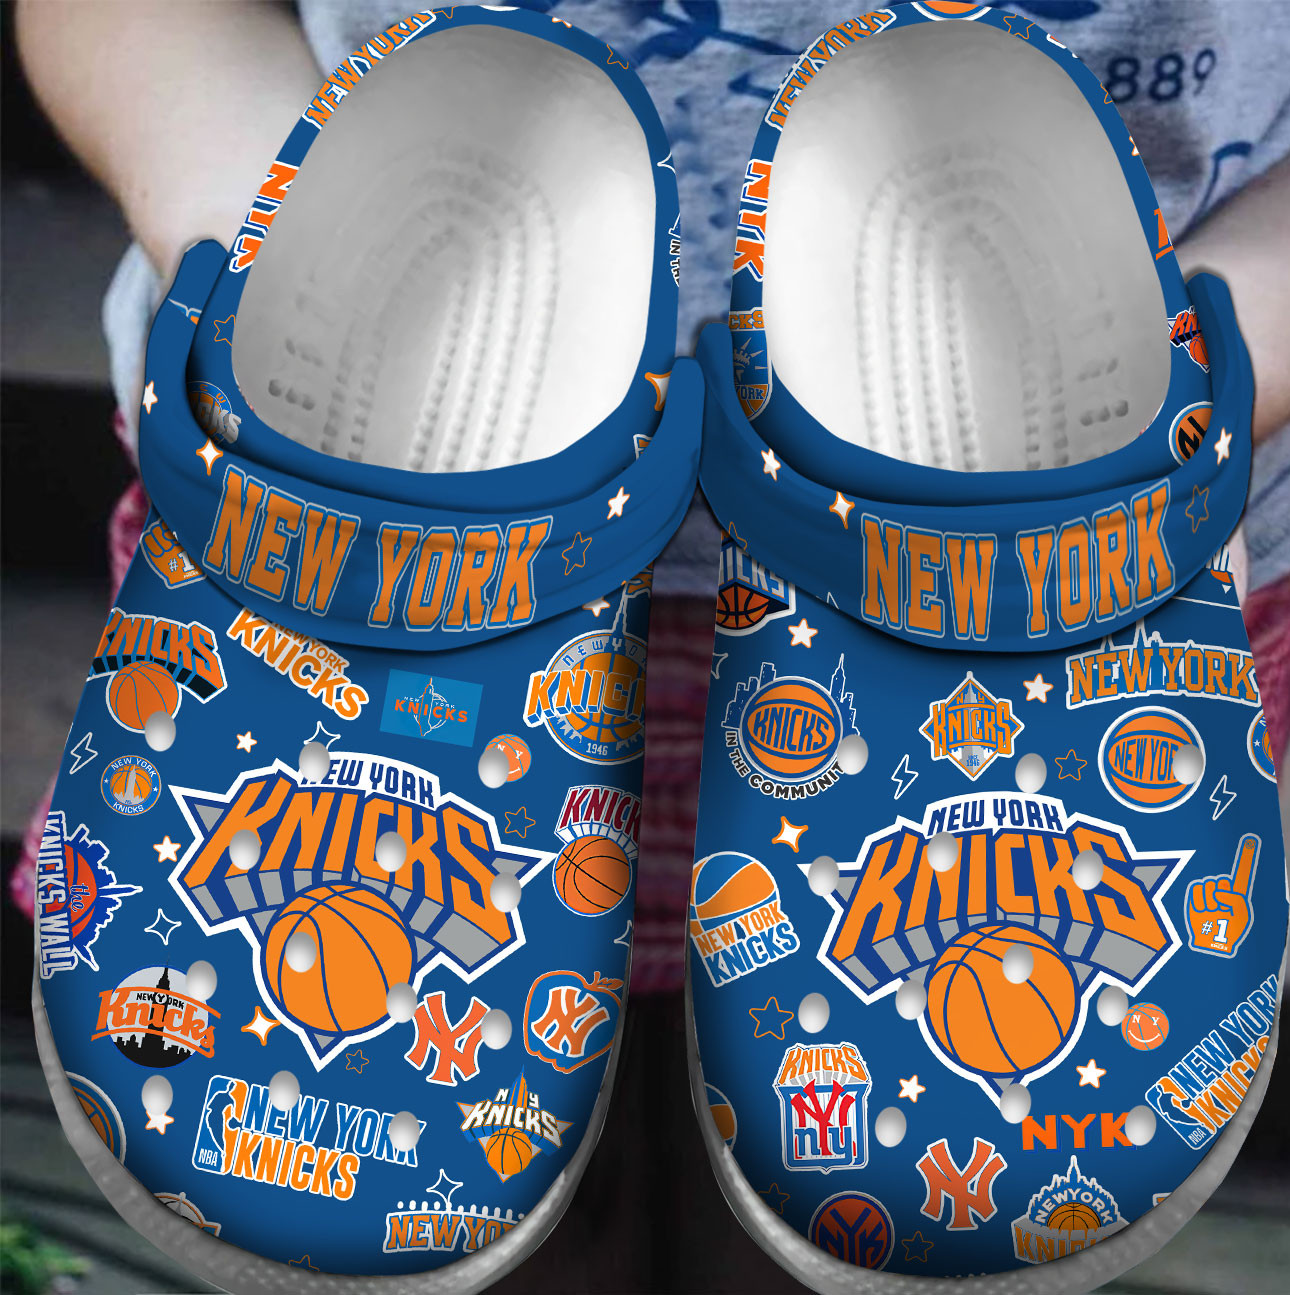 New York Knicks Crocs